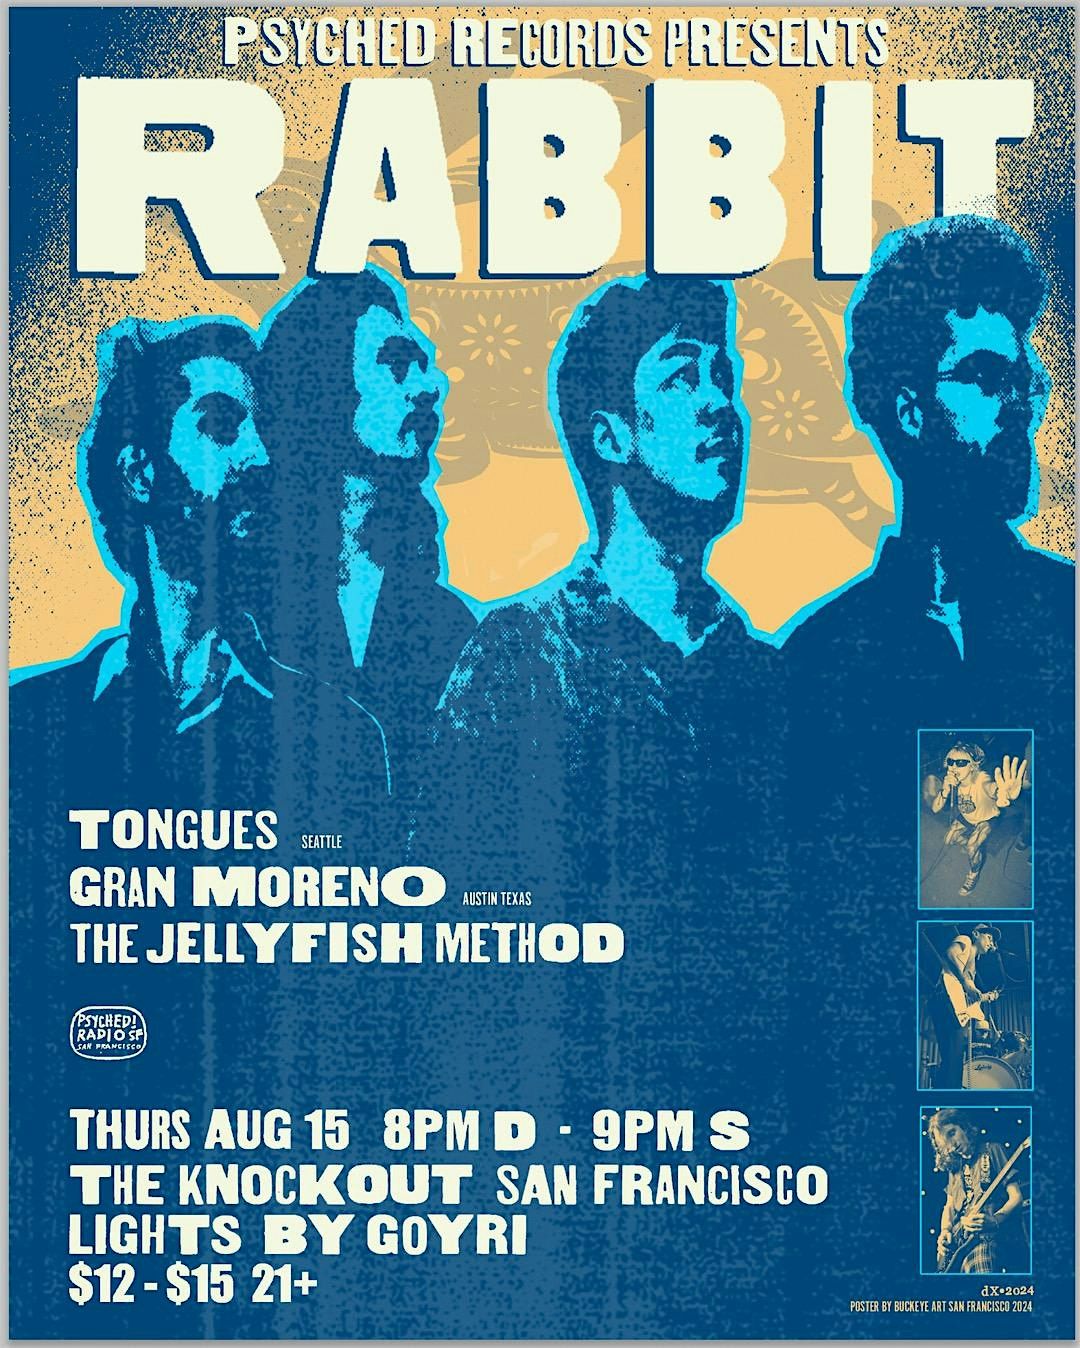 RABBIT, Tongues (Seattle), Gran Moreno (Austin) and The Jellyfish Method